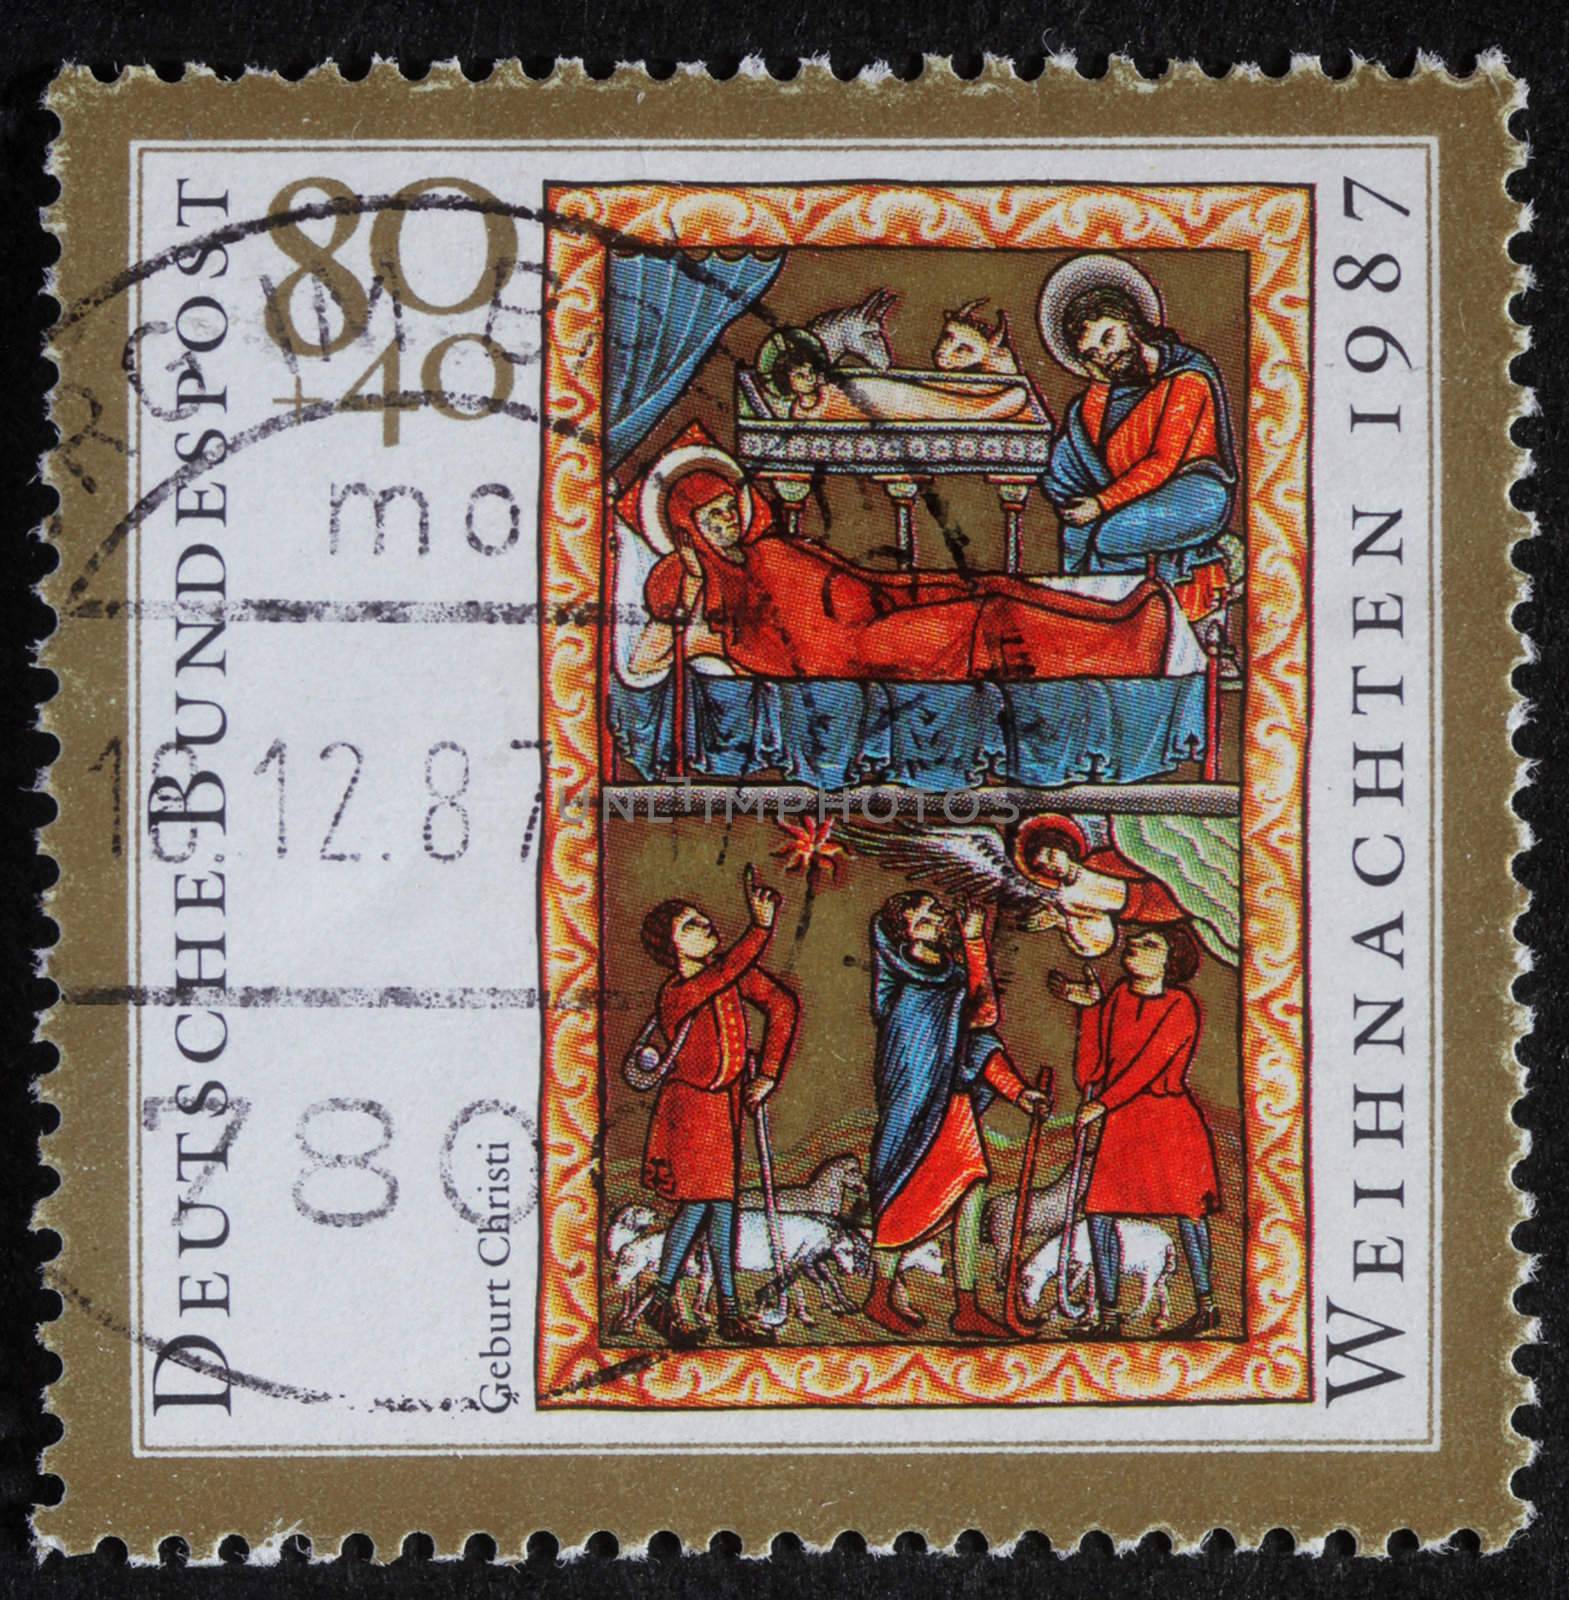 Birth of Jesus Christ, adoration of the Shepherds by atlas